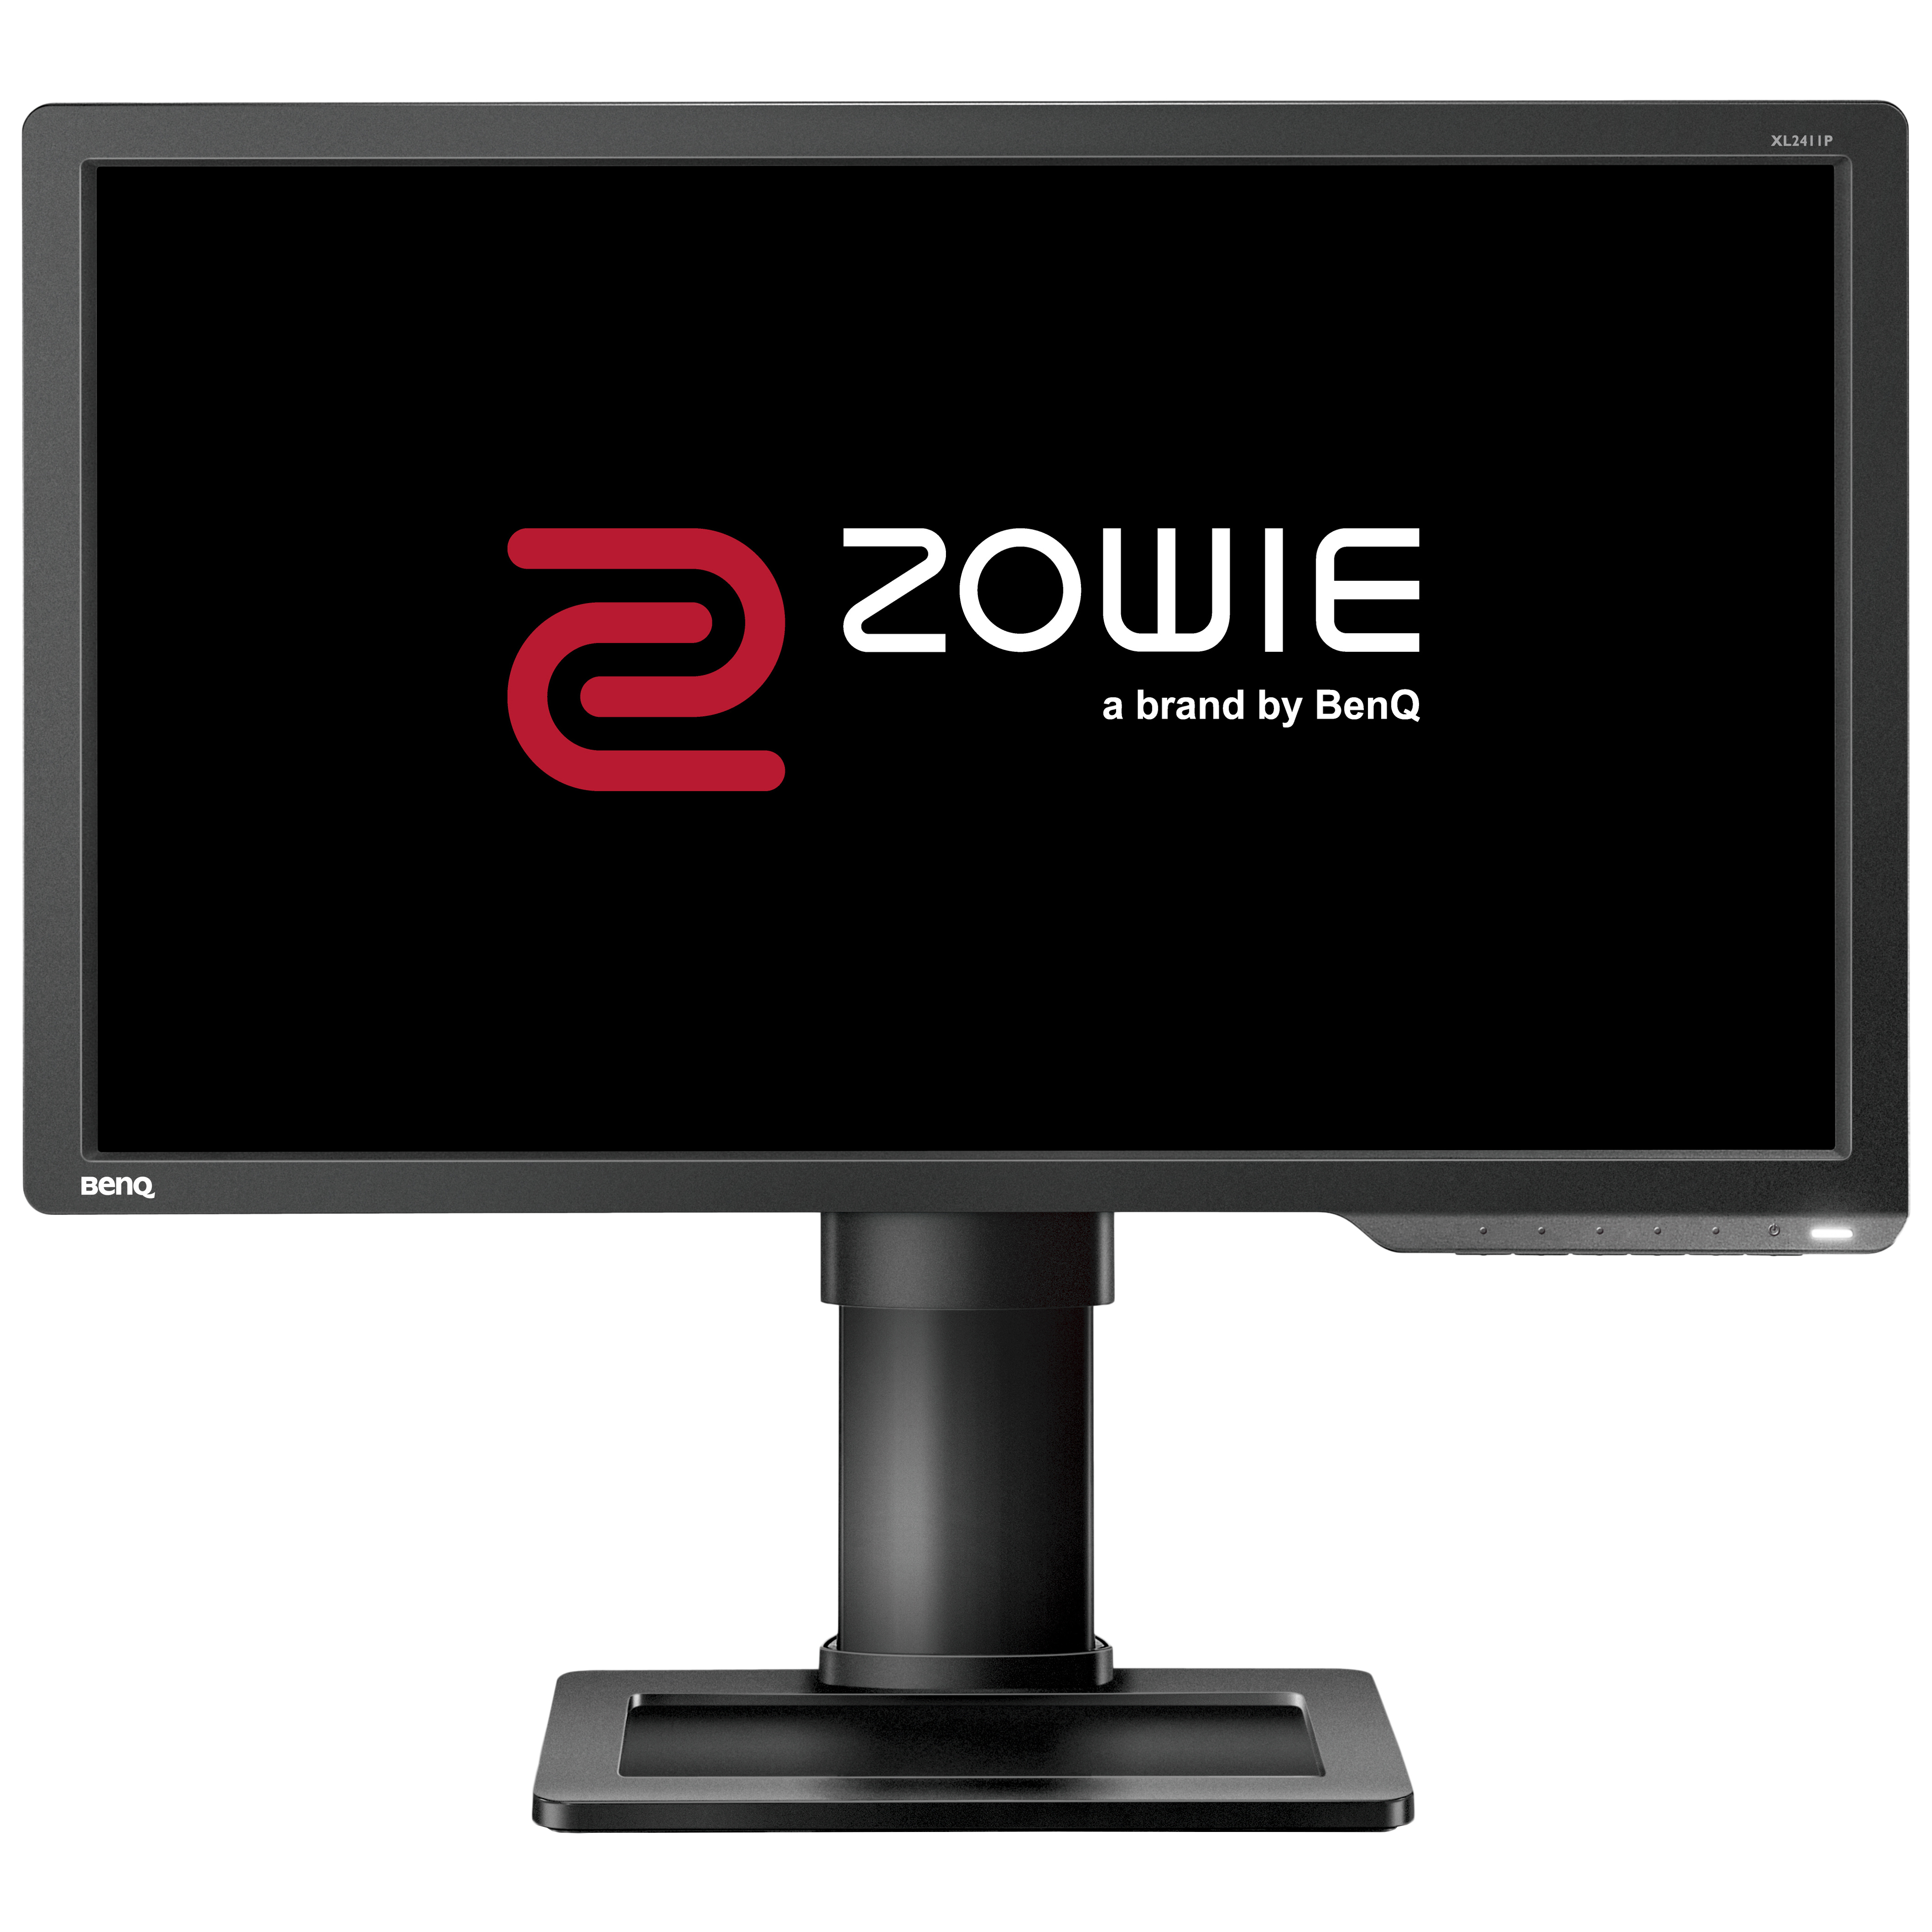 Сервис сравнение цен irizdental.ru предлагает купить Монитор BenQ Zowie XL2...